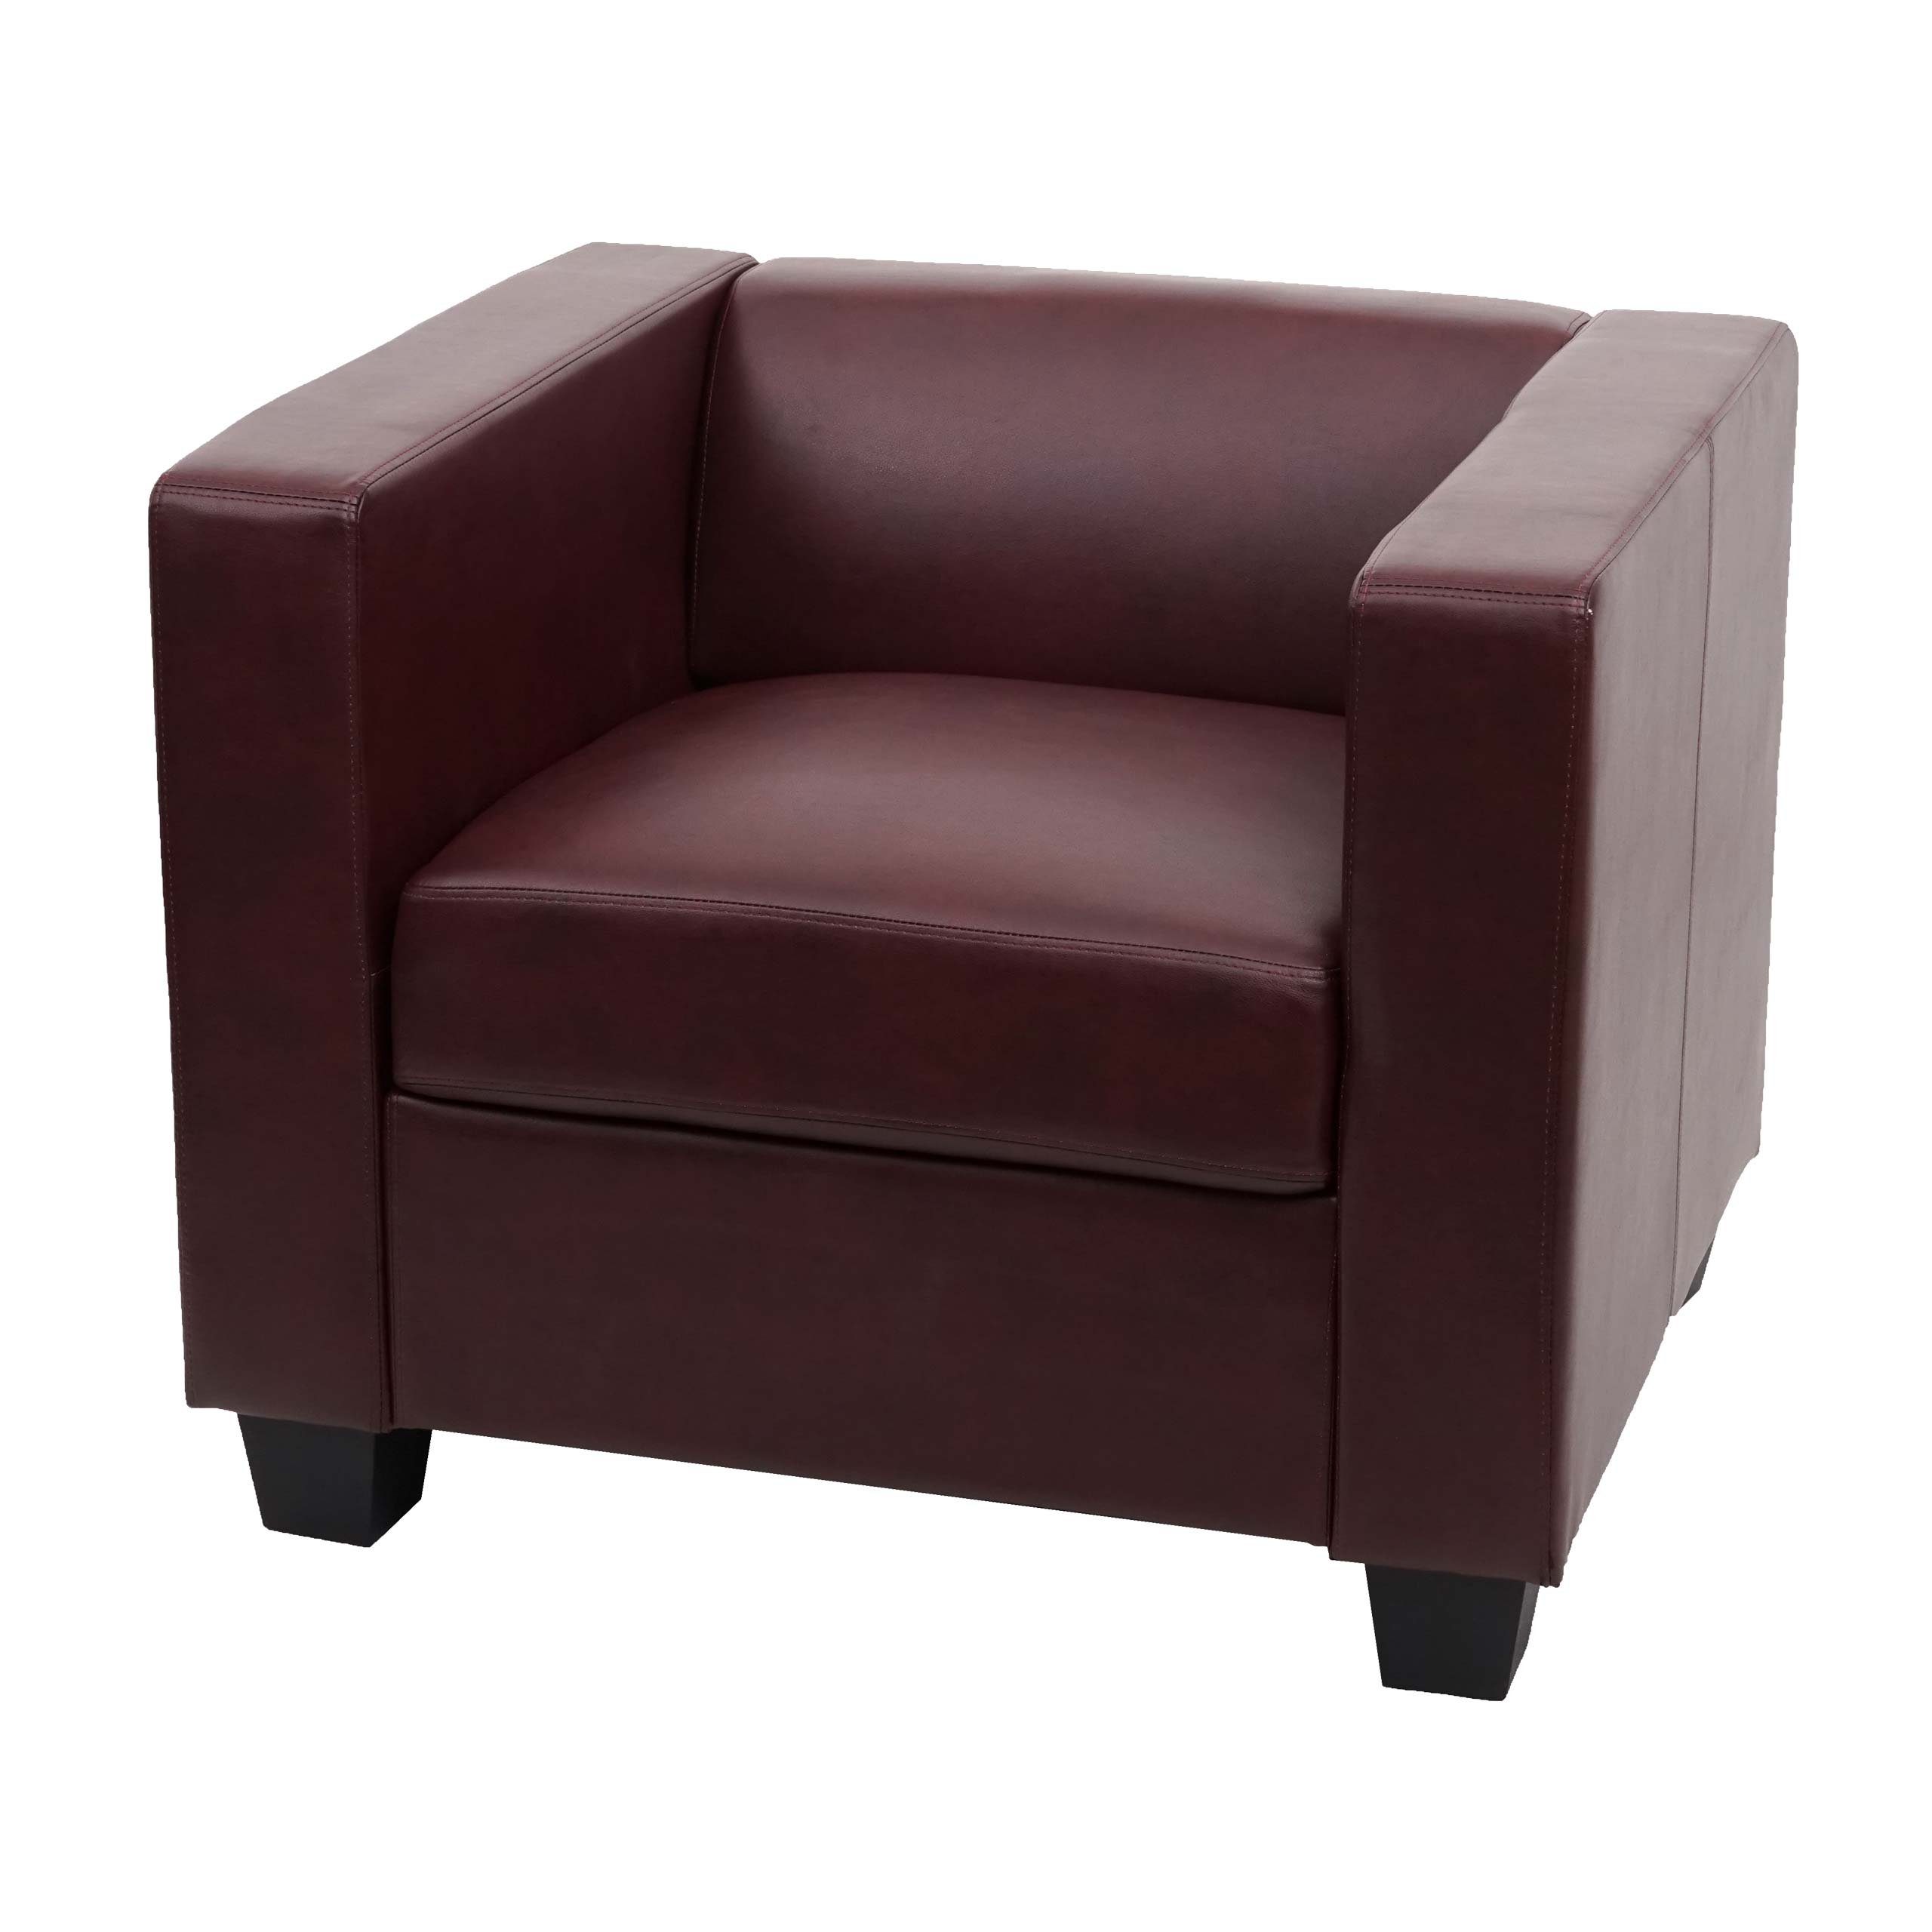 MCW Sessel Lille, Bequemes Polster, Lounge-Stil, Kunststofffüße, Hohe Standfestigkeit rot-braun